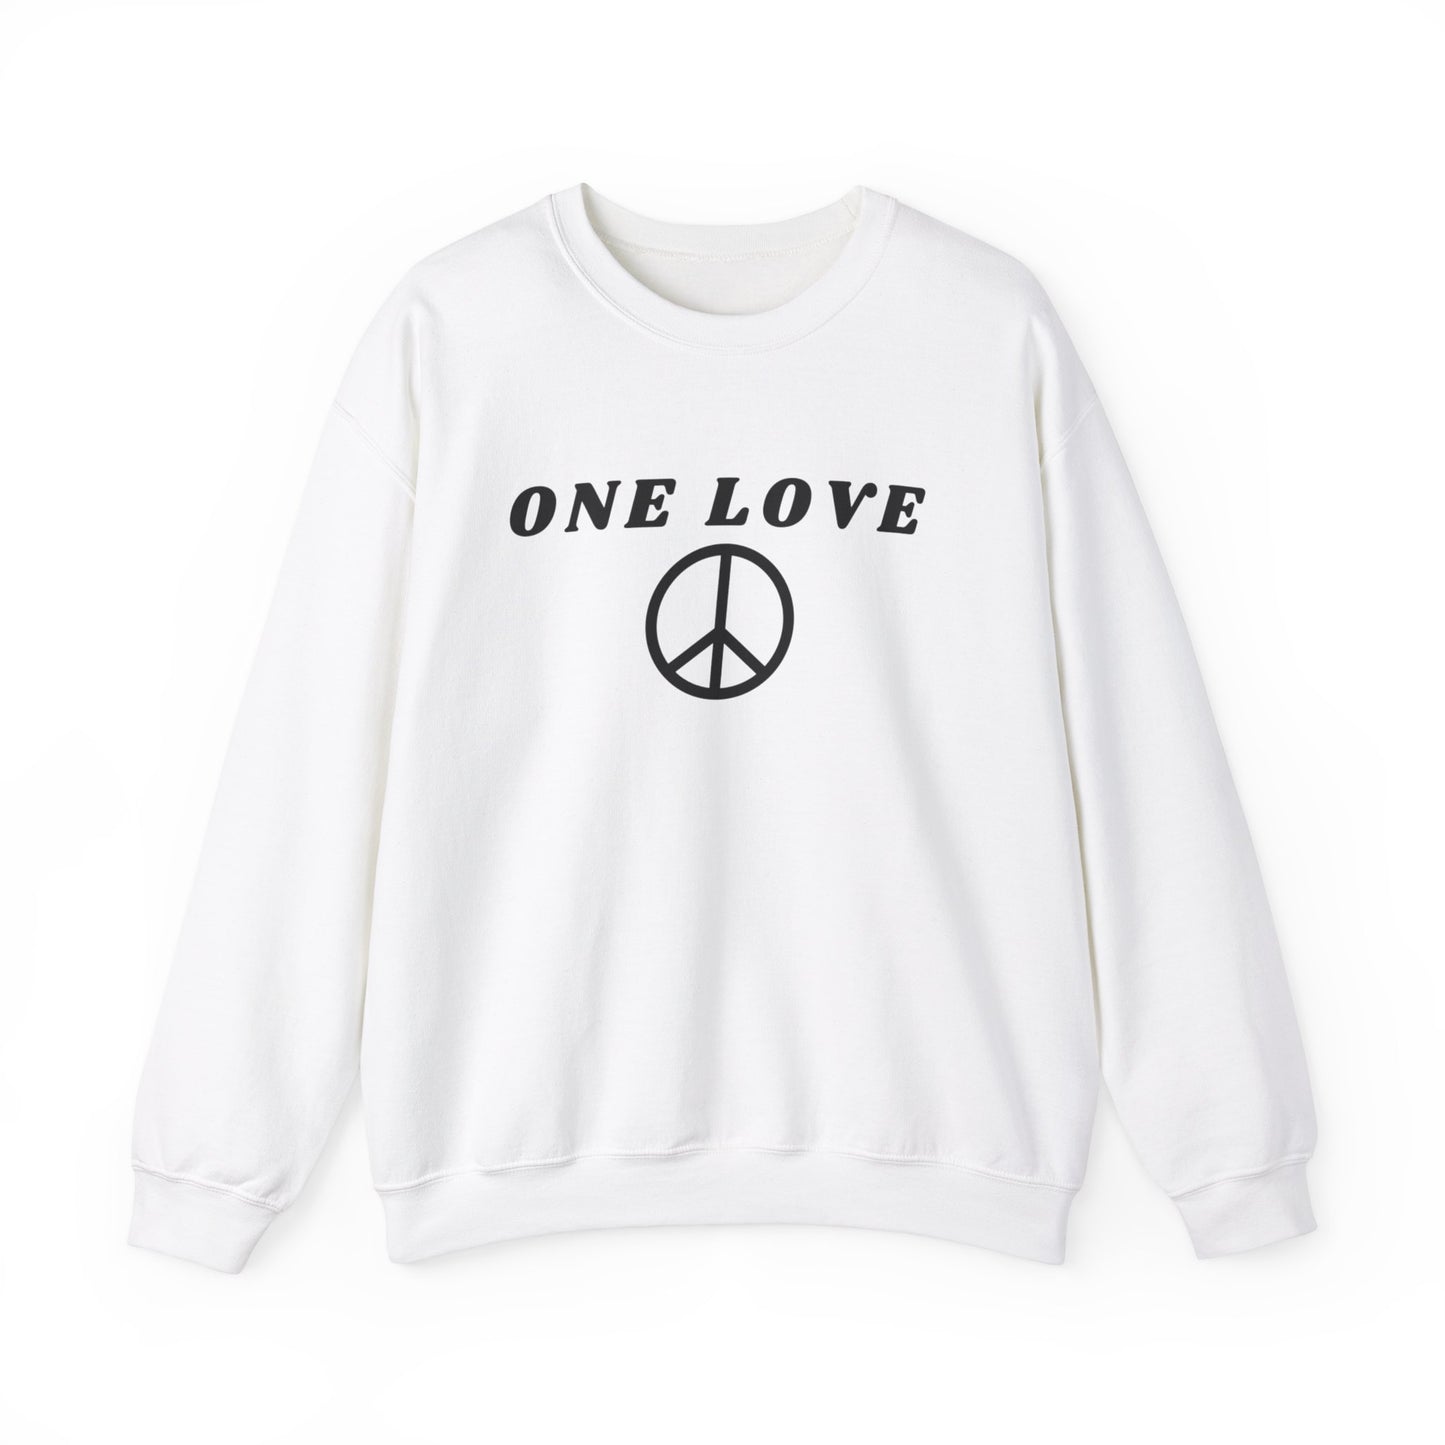 ONE LOVE PEACE SWEATSHIRT